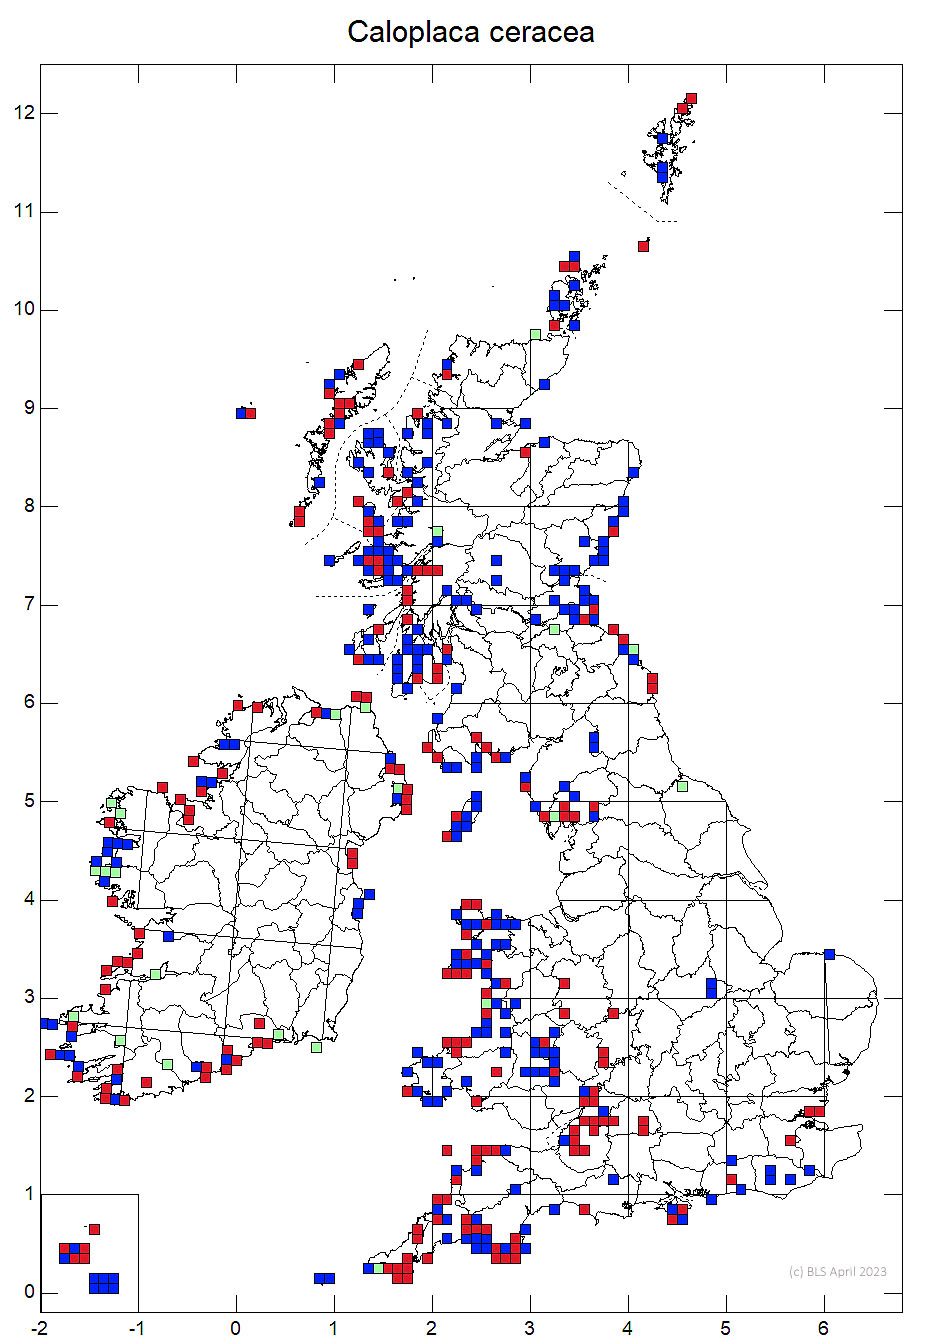 Caloplaca ceracea 10km sq distribution map